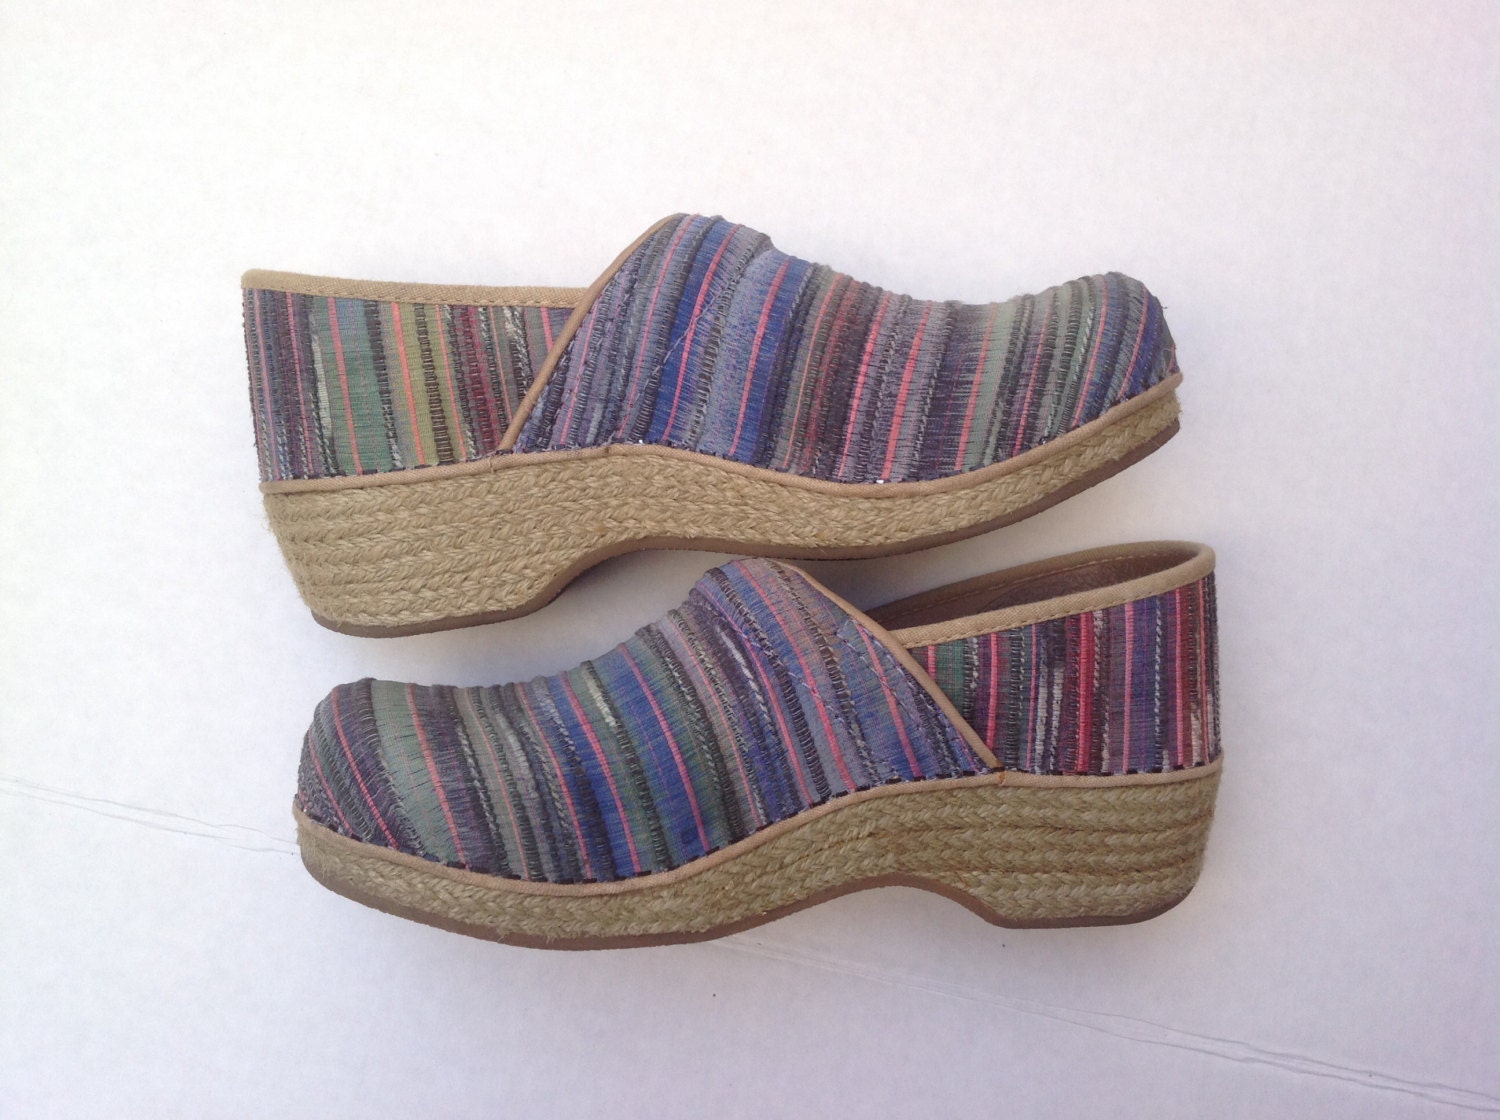 SALE Dansko clogs size 9.5 SALE / striped fabric shoes